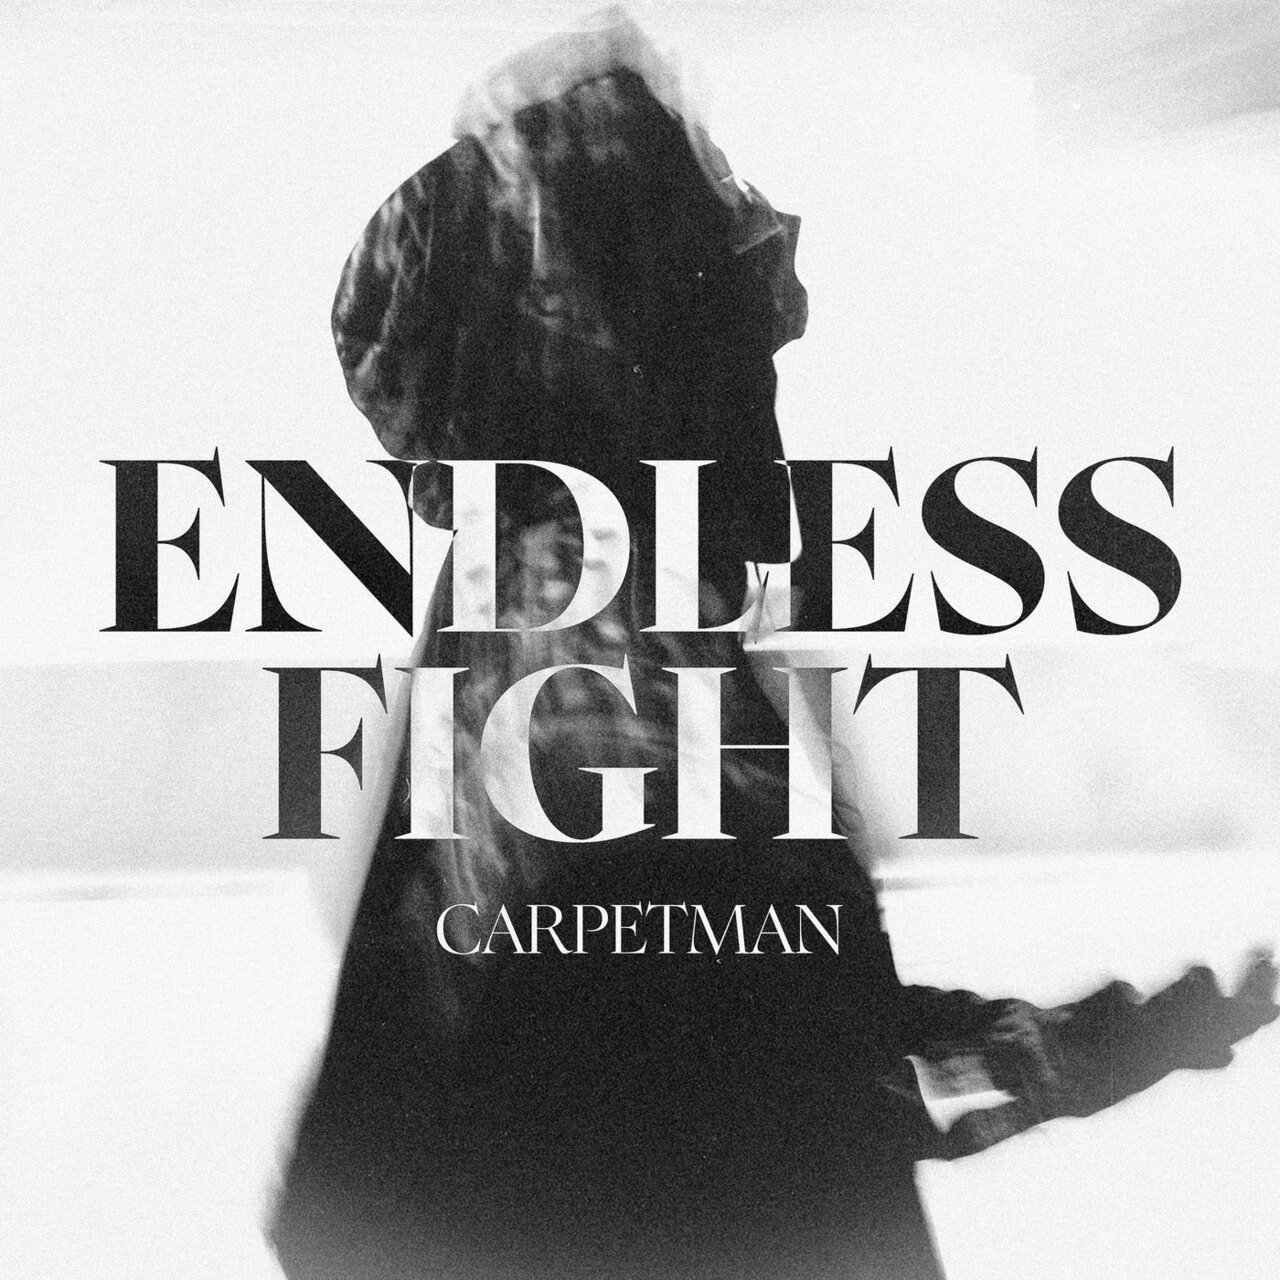 Carpetman — Endless fight cover artwork